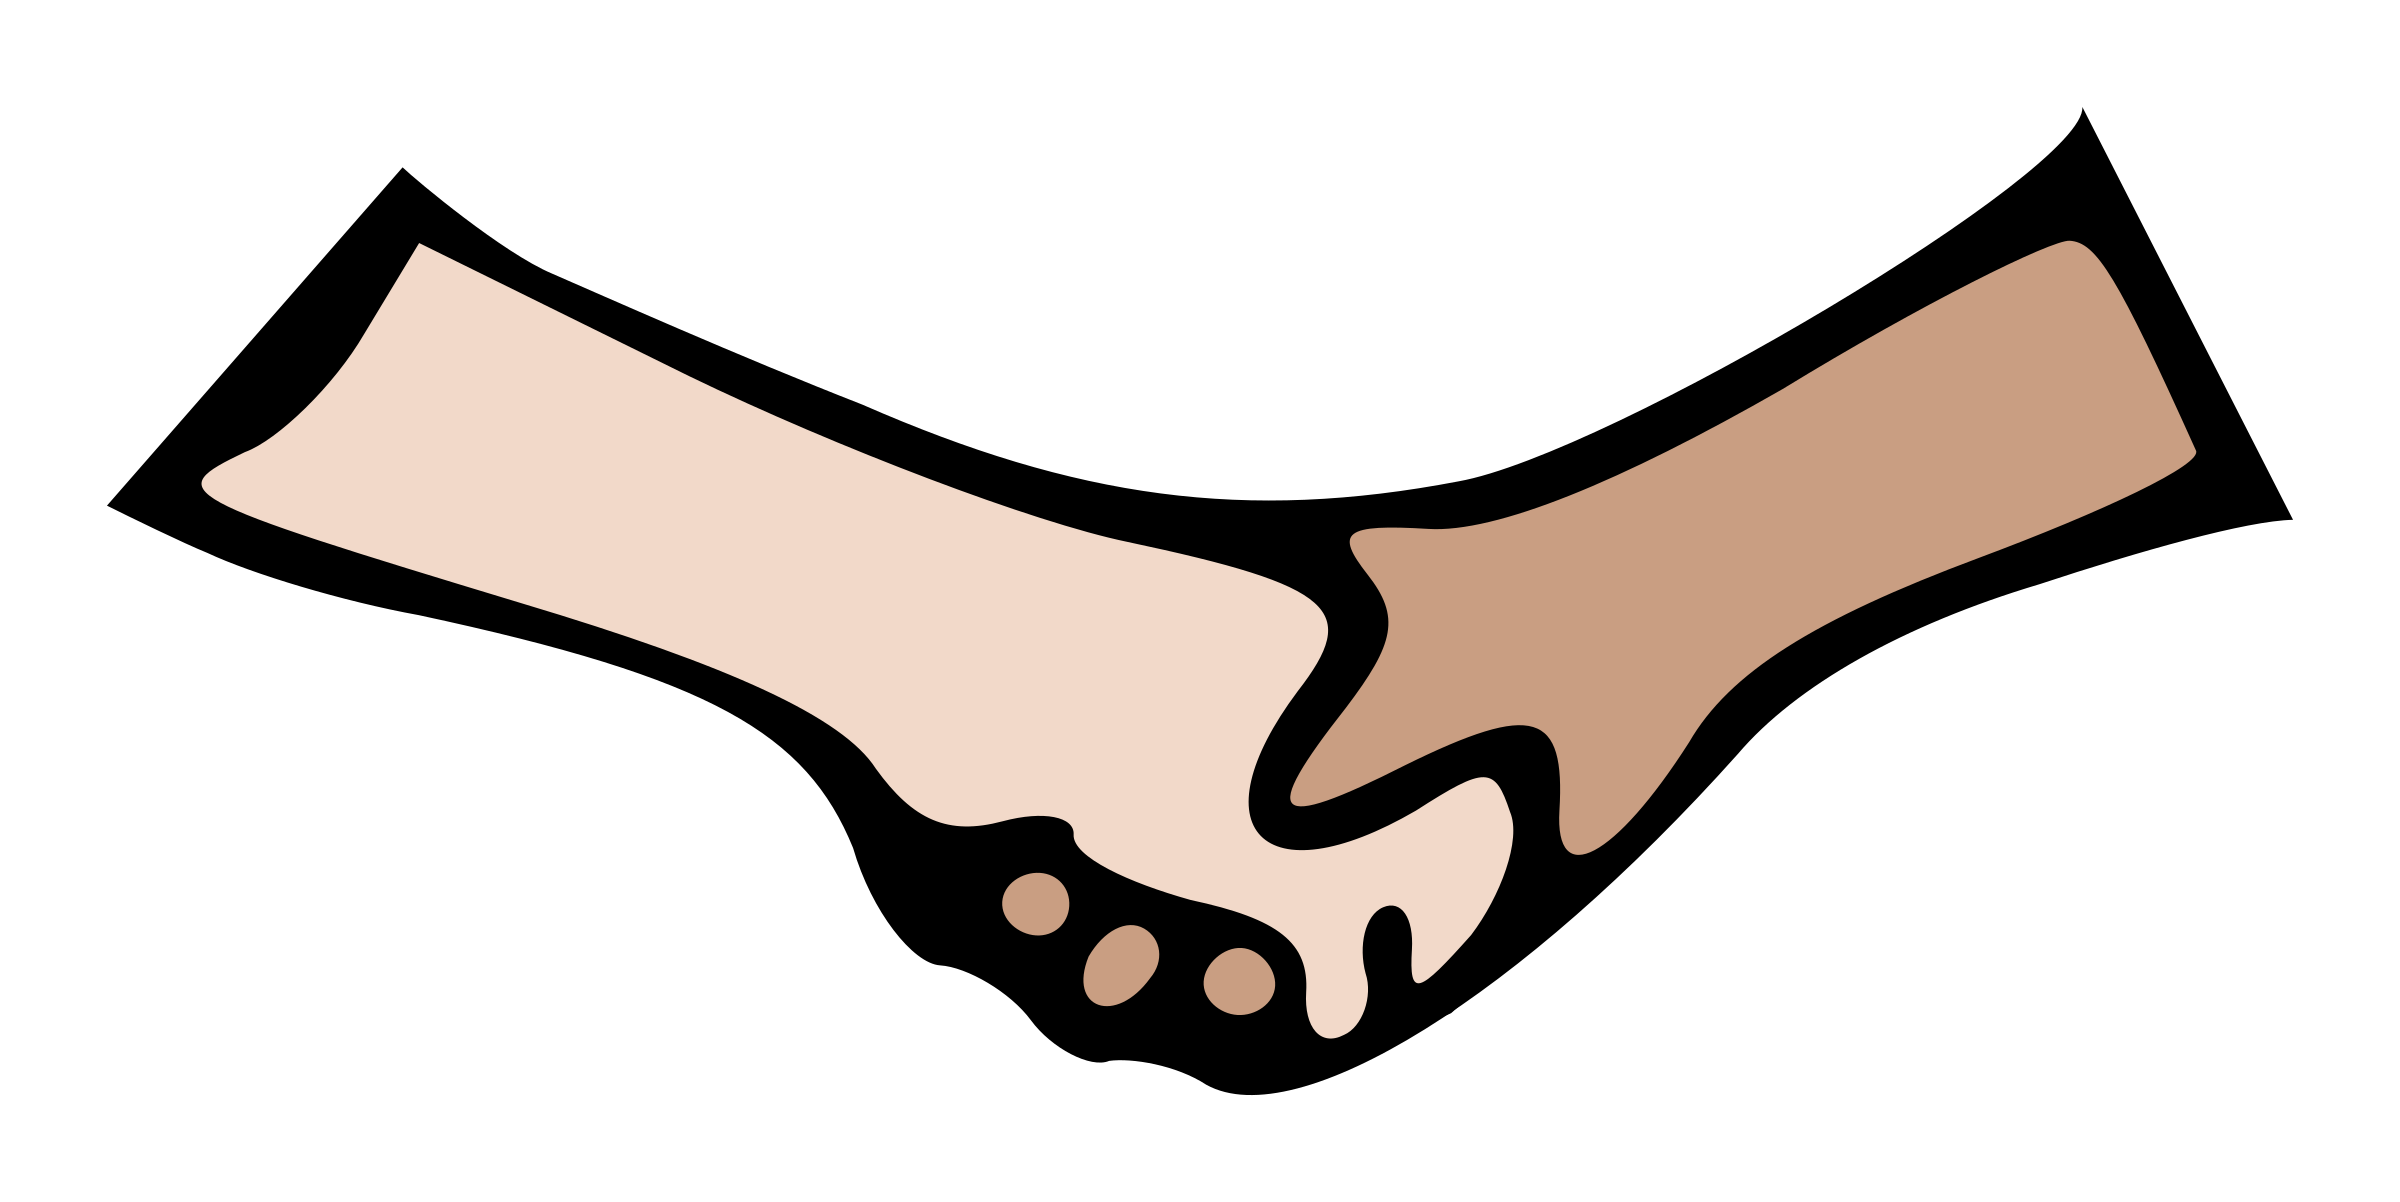 handshake clipart friendly